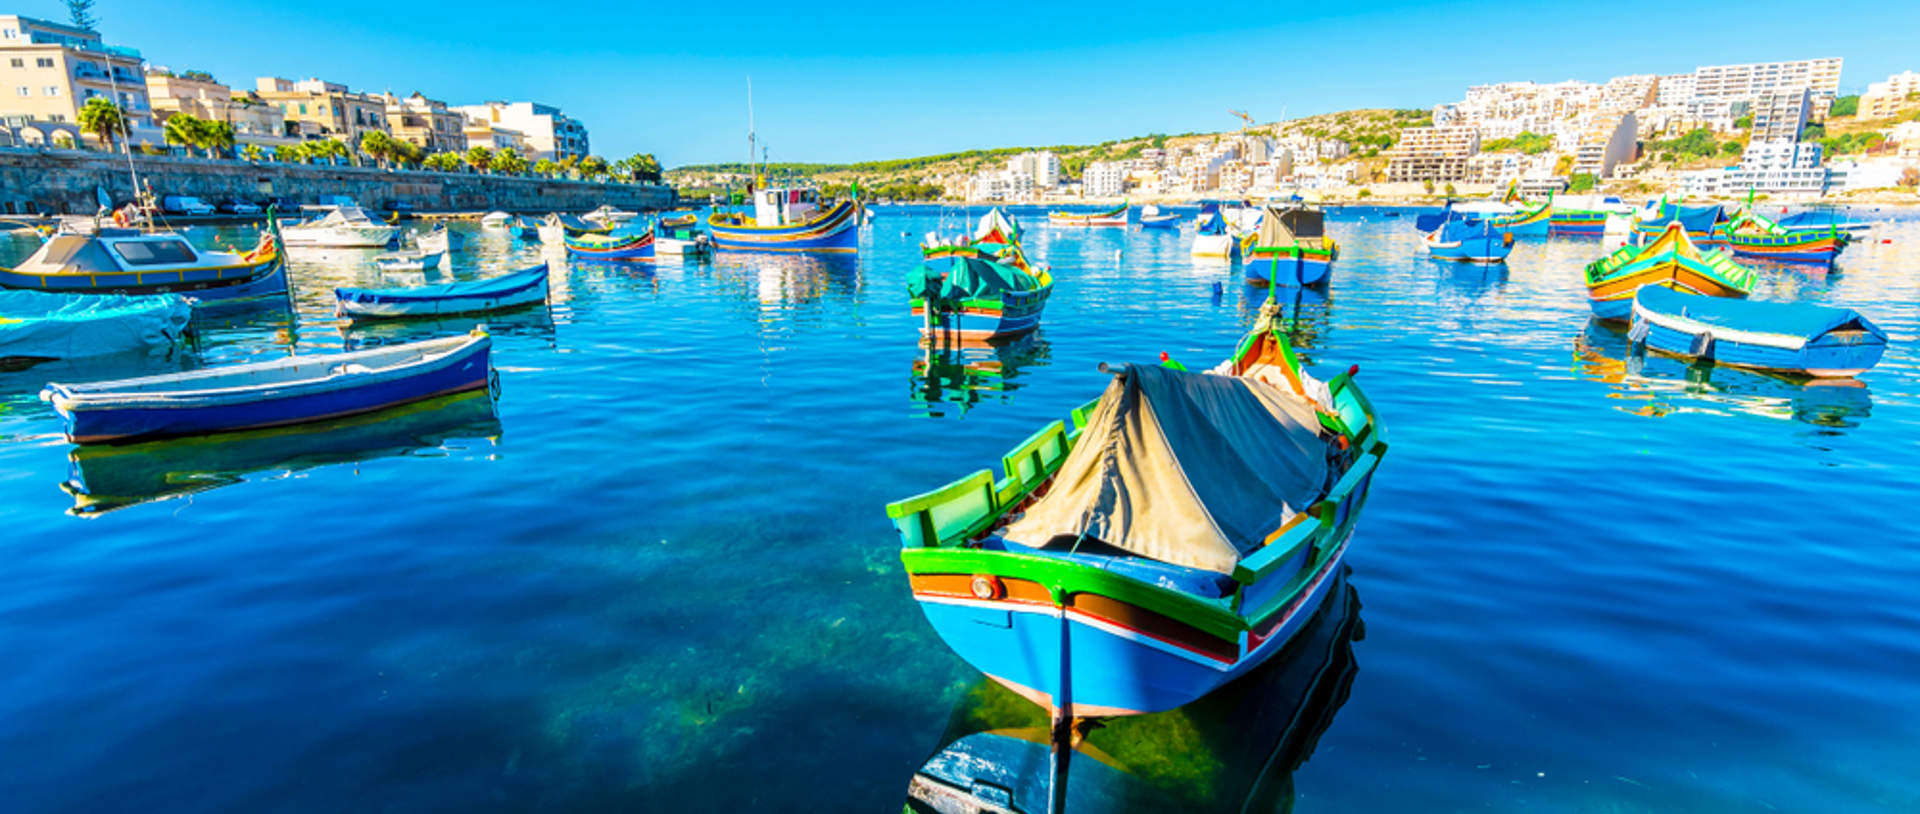 St Pauls Bay, Malta